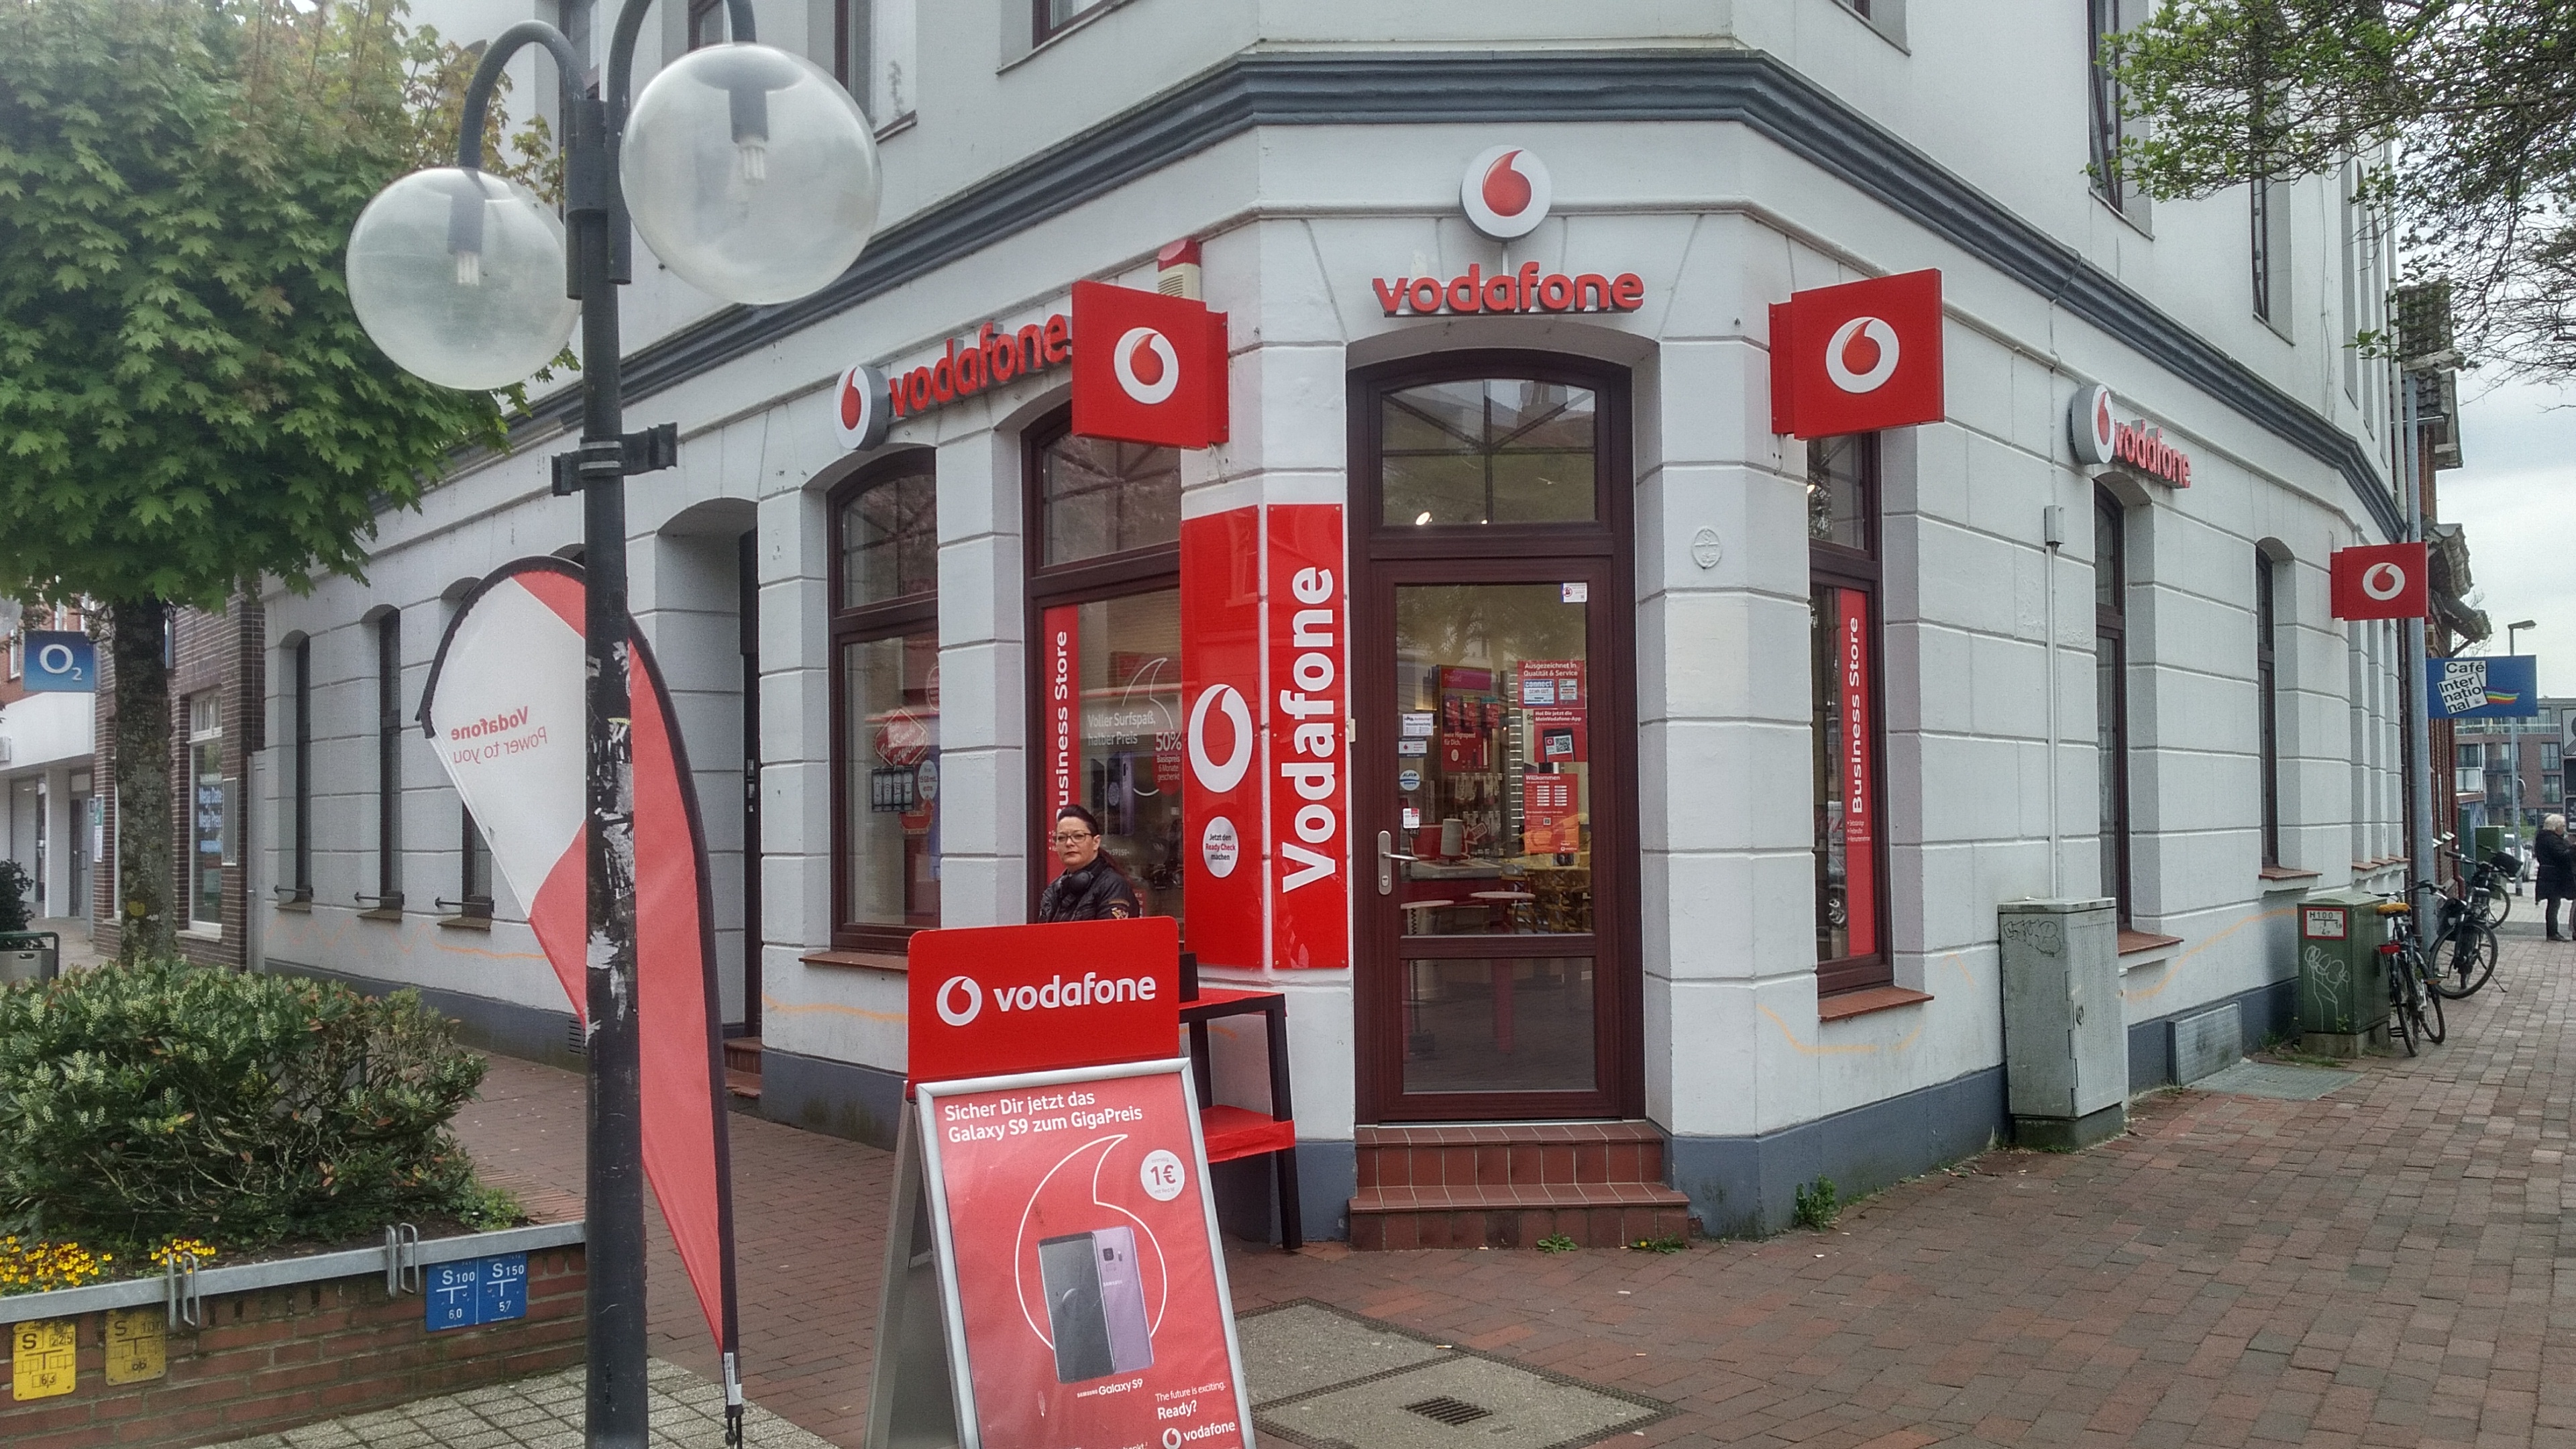 Building energy efficient 5G networks: Vodafone and Deutsche Telekom